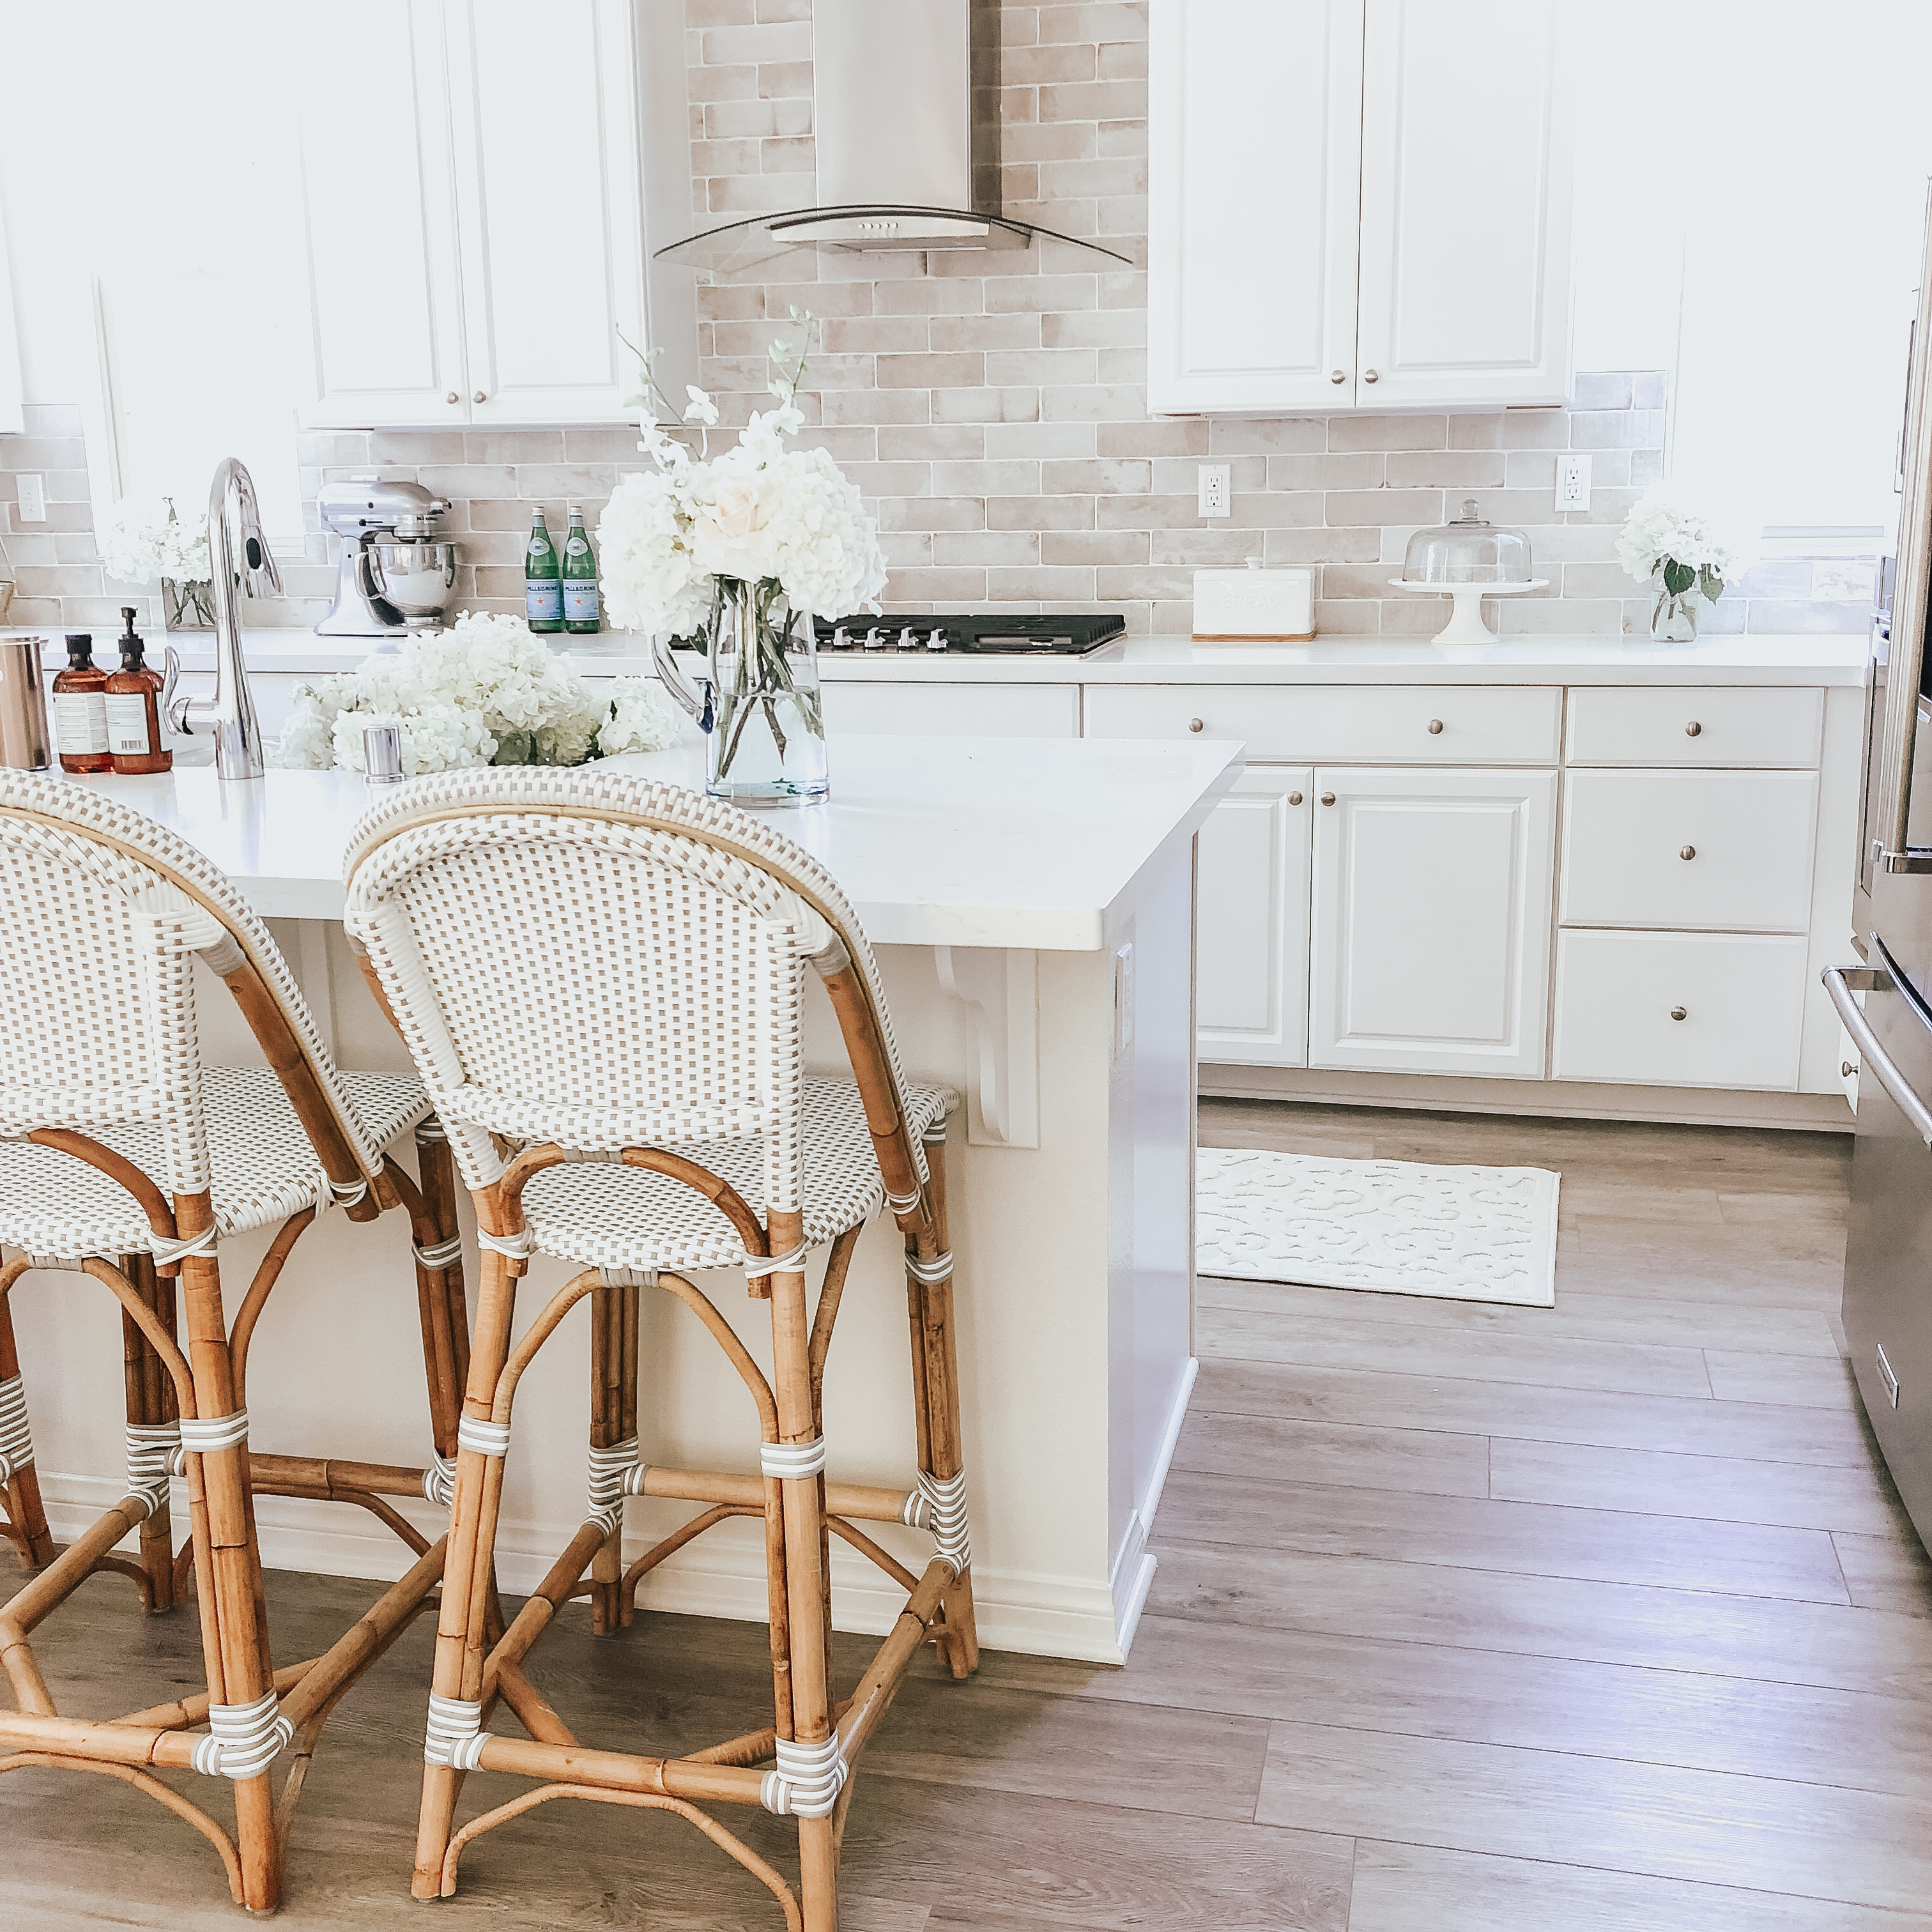 Lifestyle Blogger Katelyn Jones shares the home decor of her kitchen